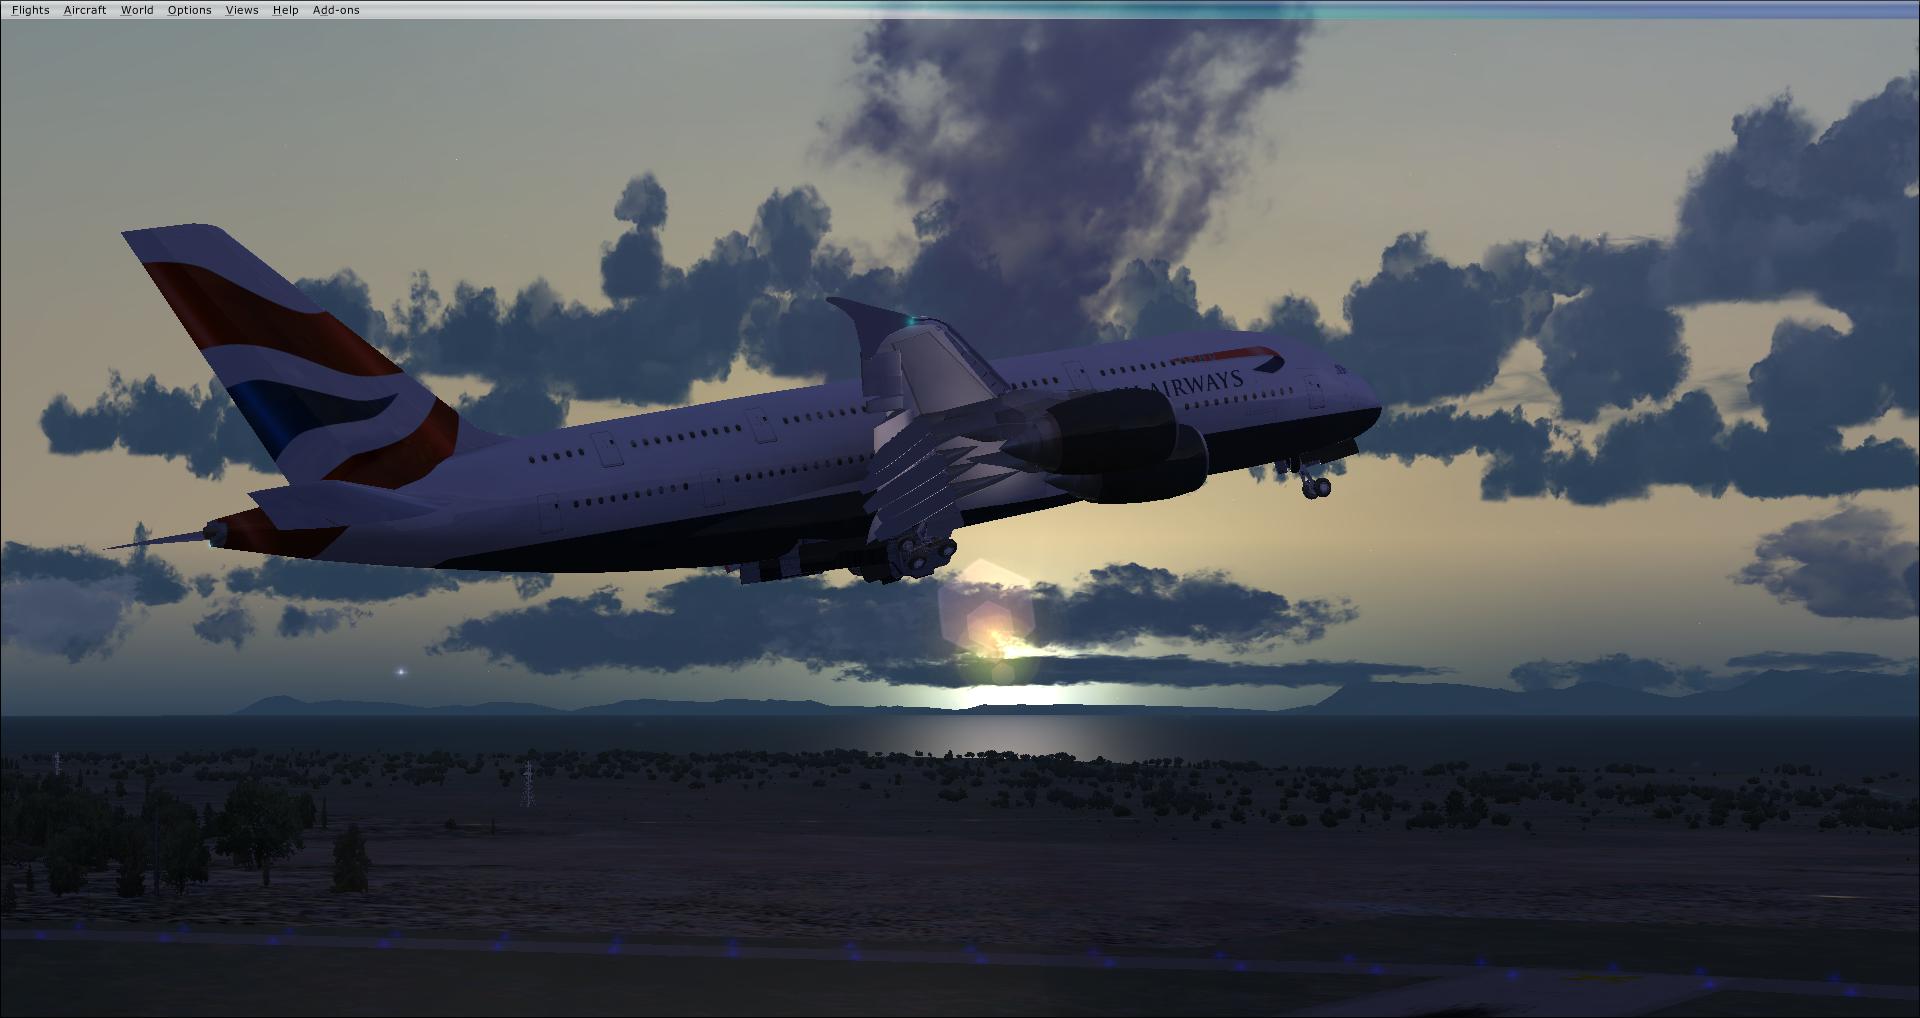 Departing Iceland at dawn